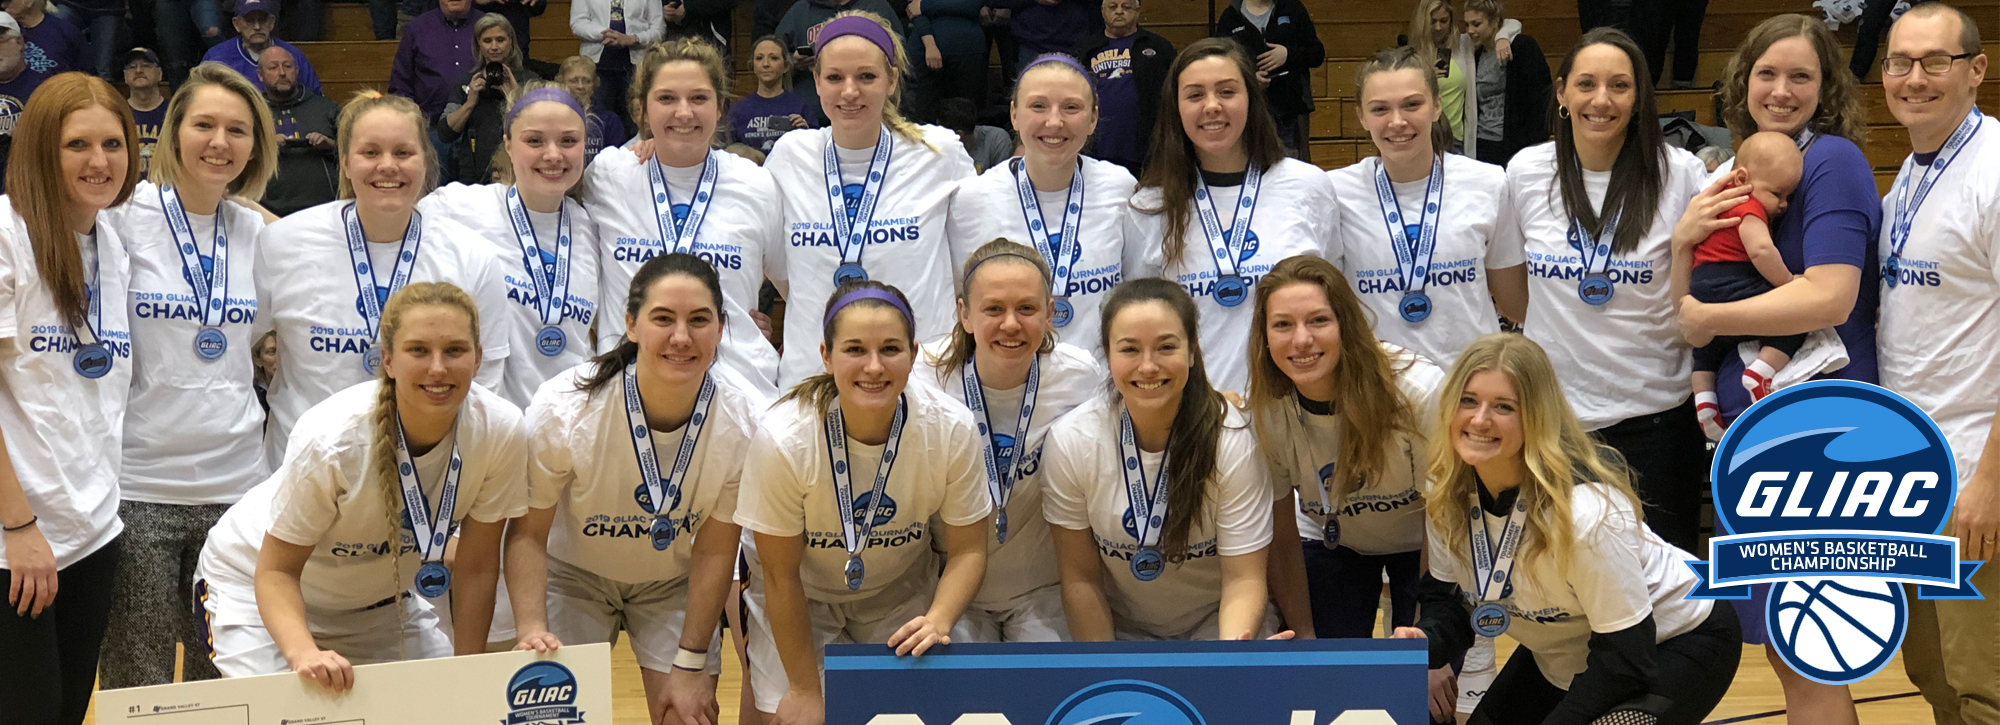 Eagles claim sixth GLIAC Women's Basketball Tournament title